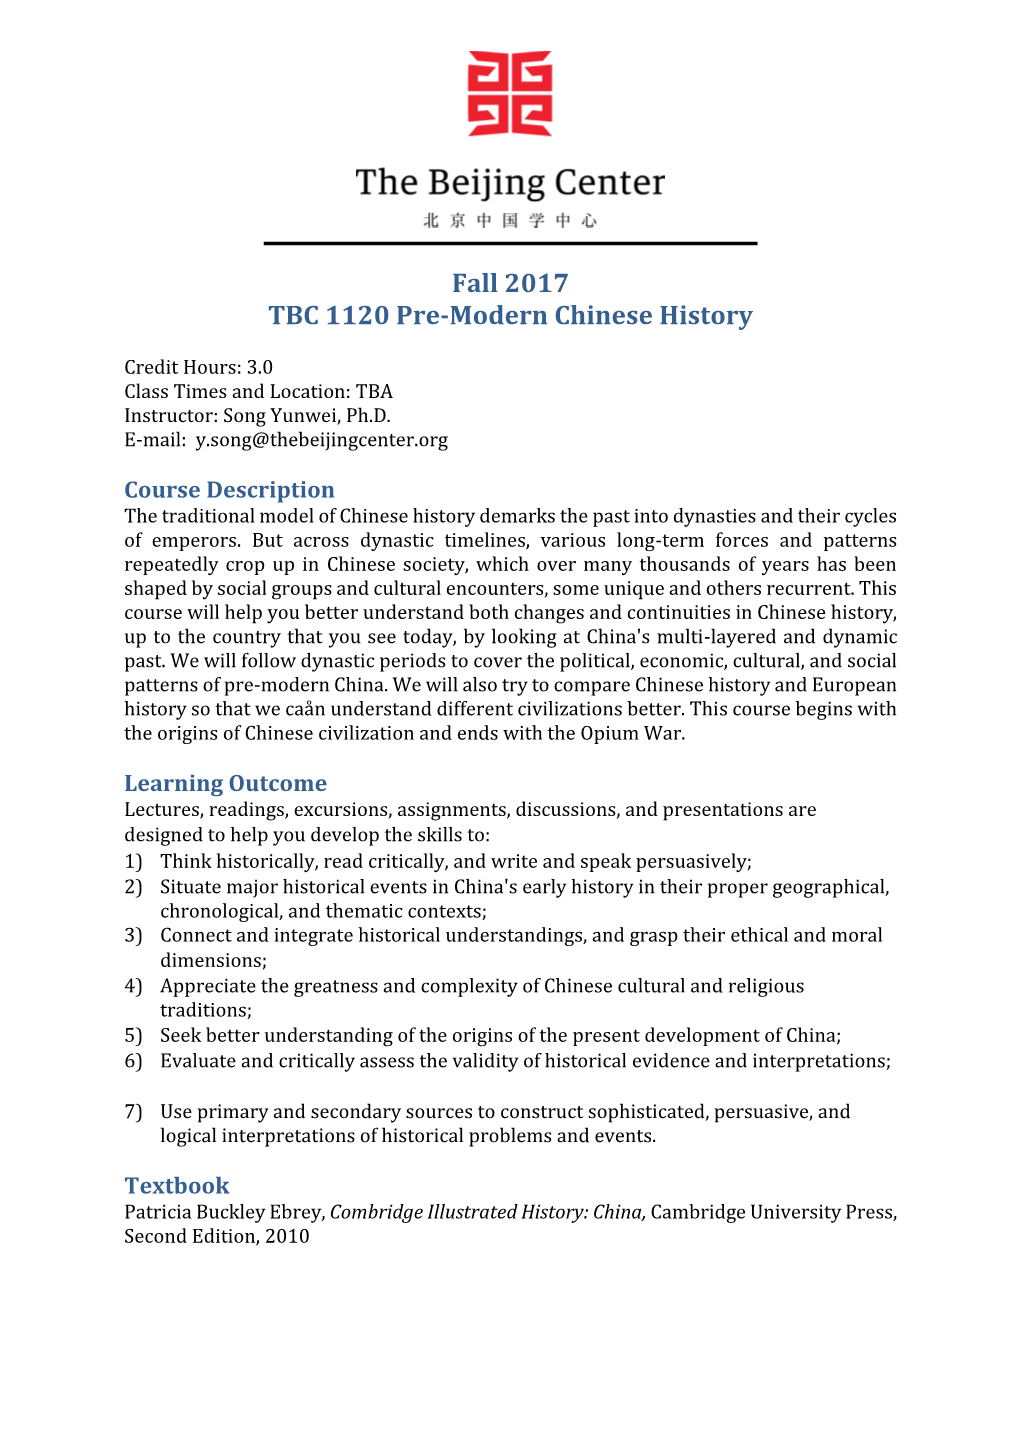 Fall 2017 TBC 1120 Pre-Modern Chinese History